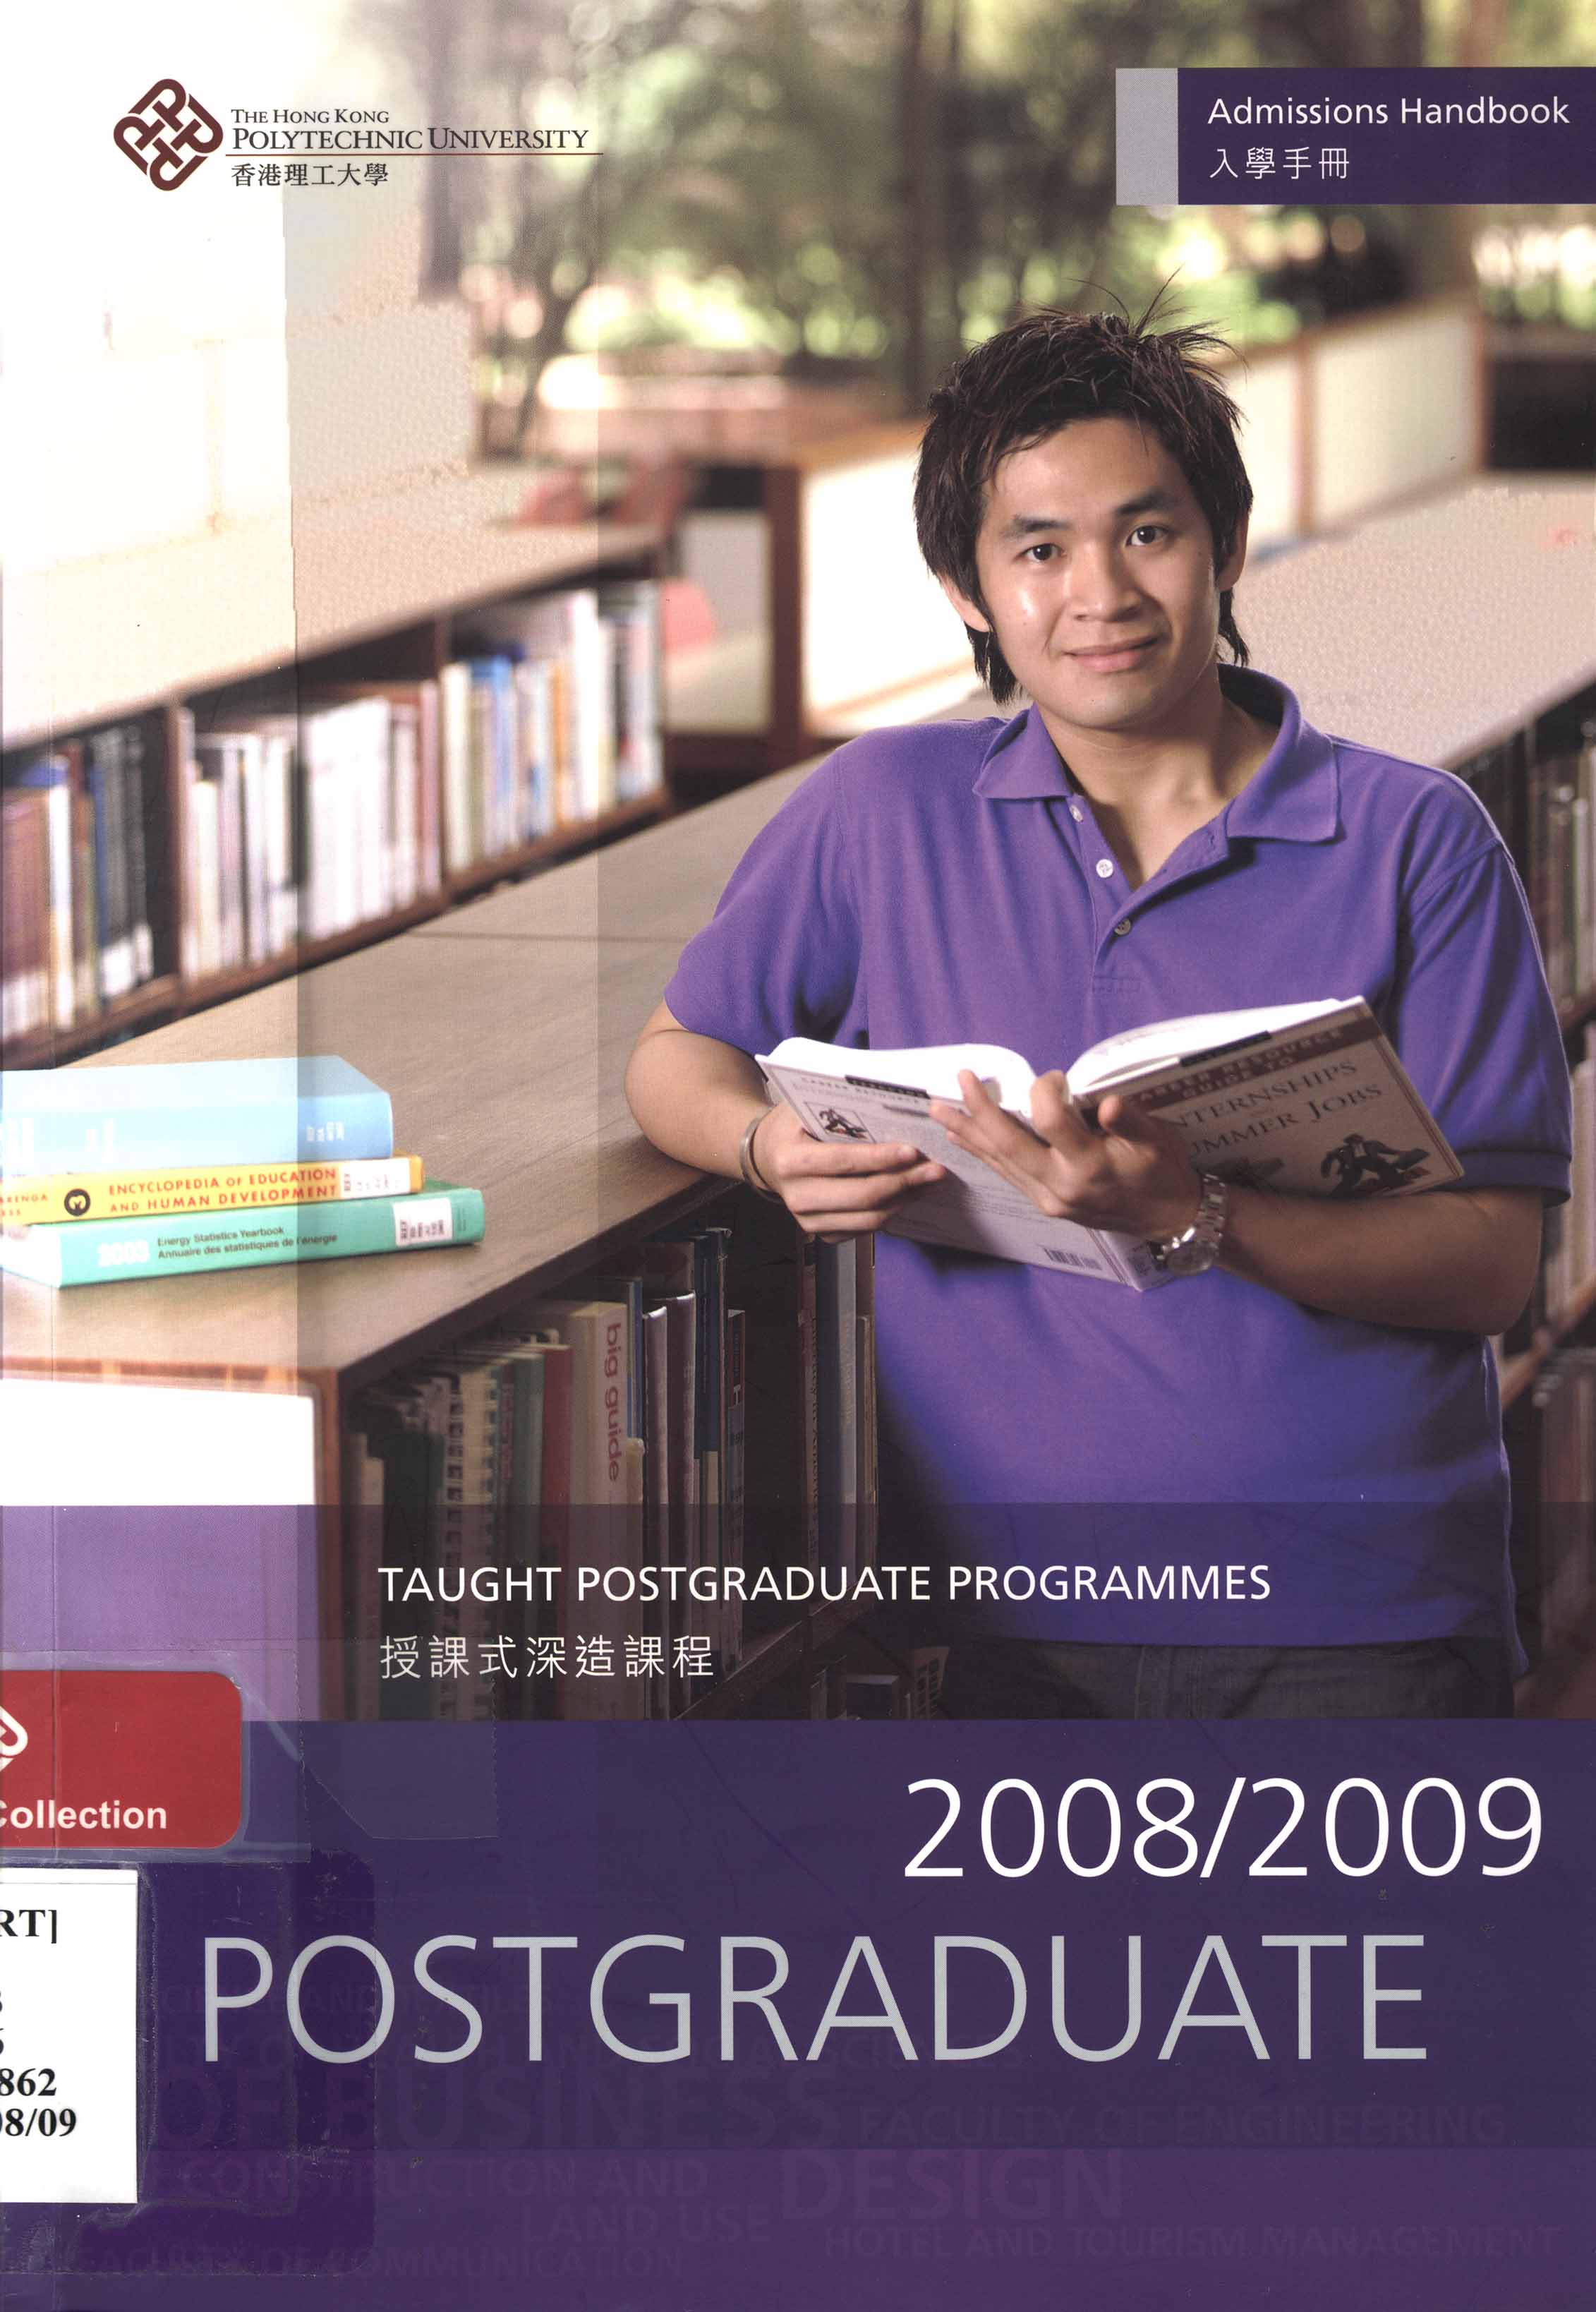 Hong Kong Polytechnic University. Taught postgraduate programmes: admissions handbook 2008/09